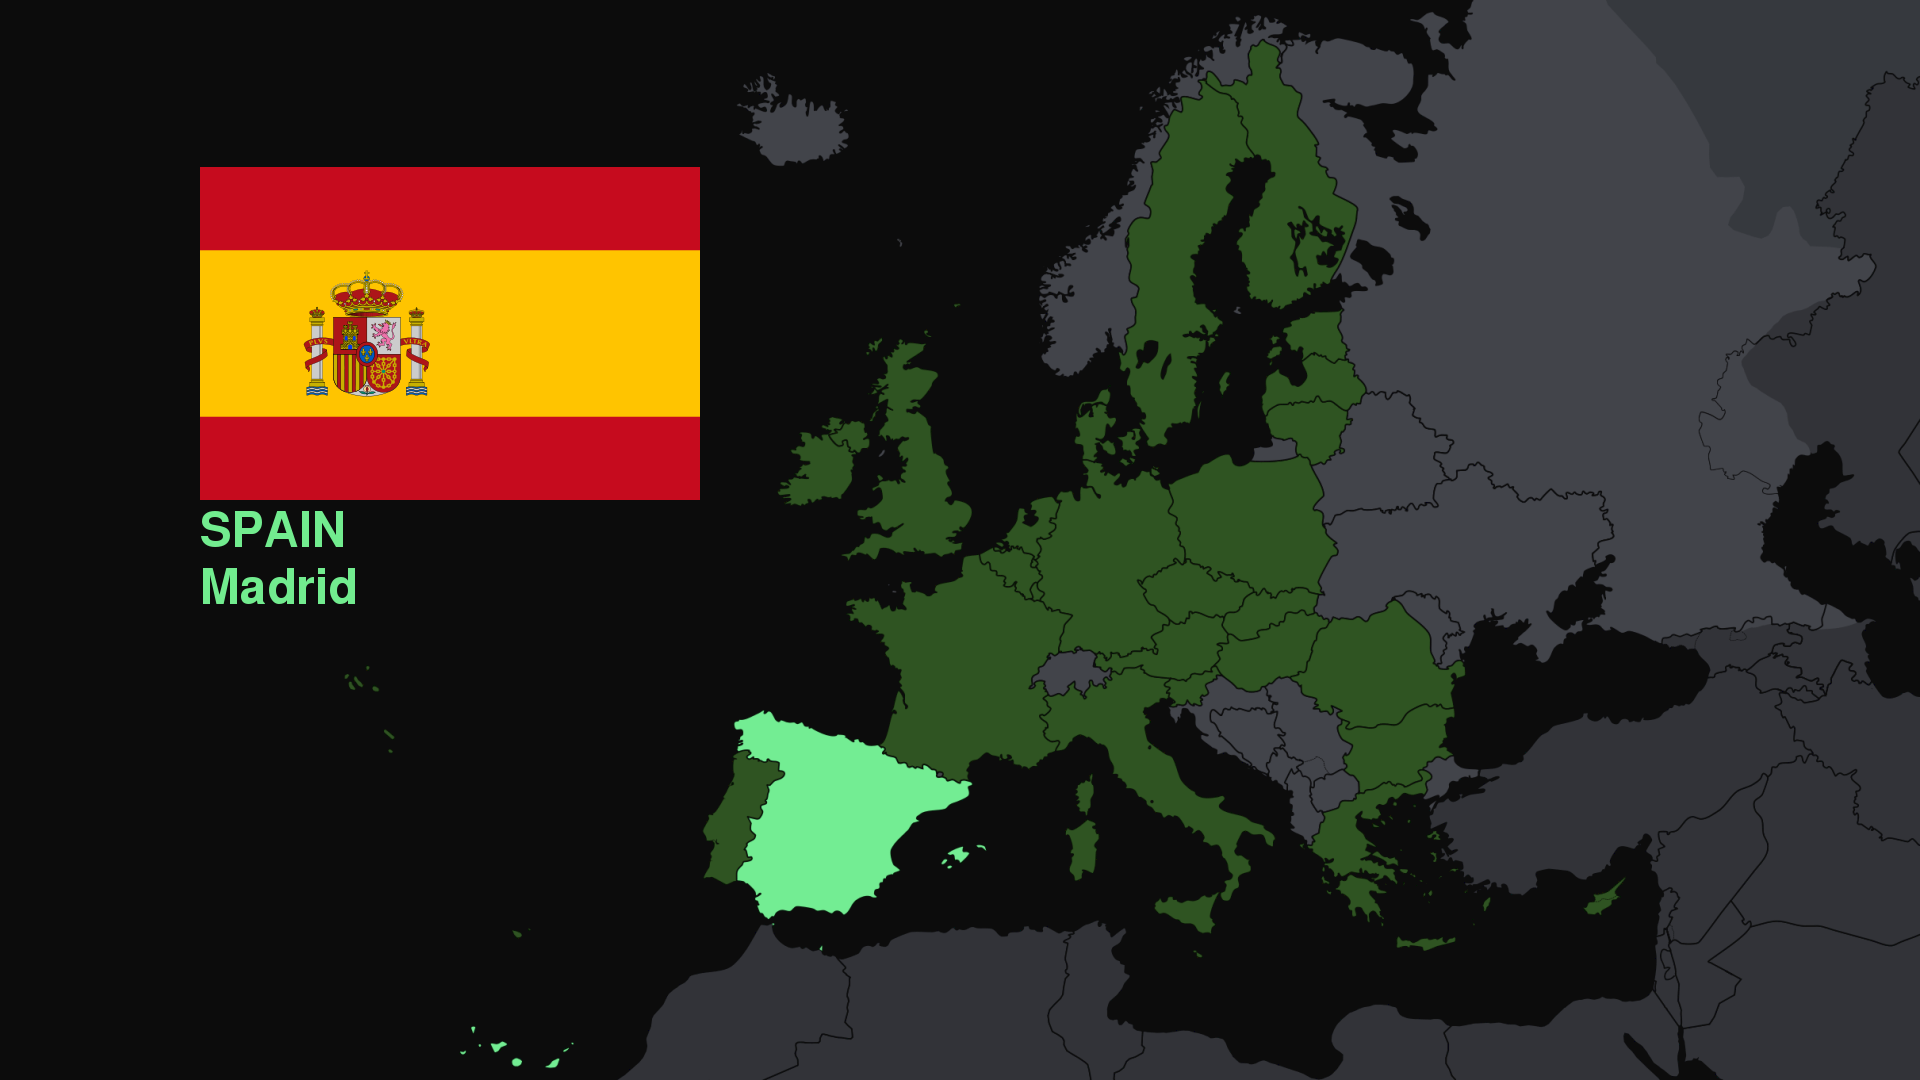 General 1920x1080 Spain flag map Europe digital art